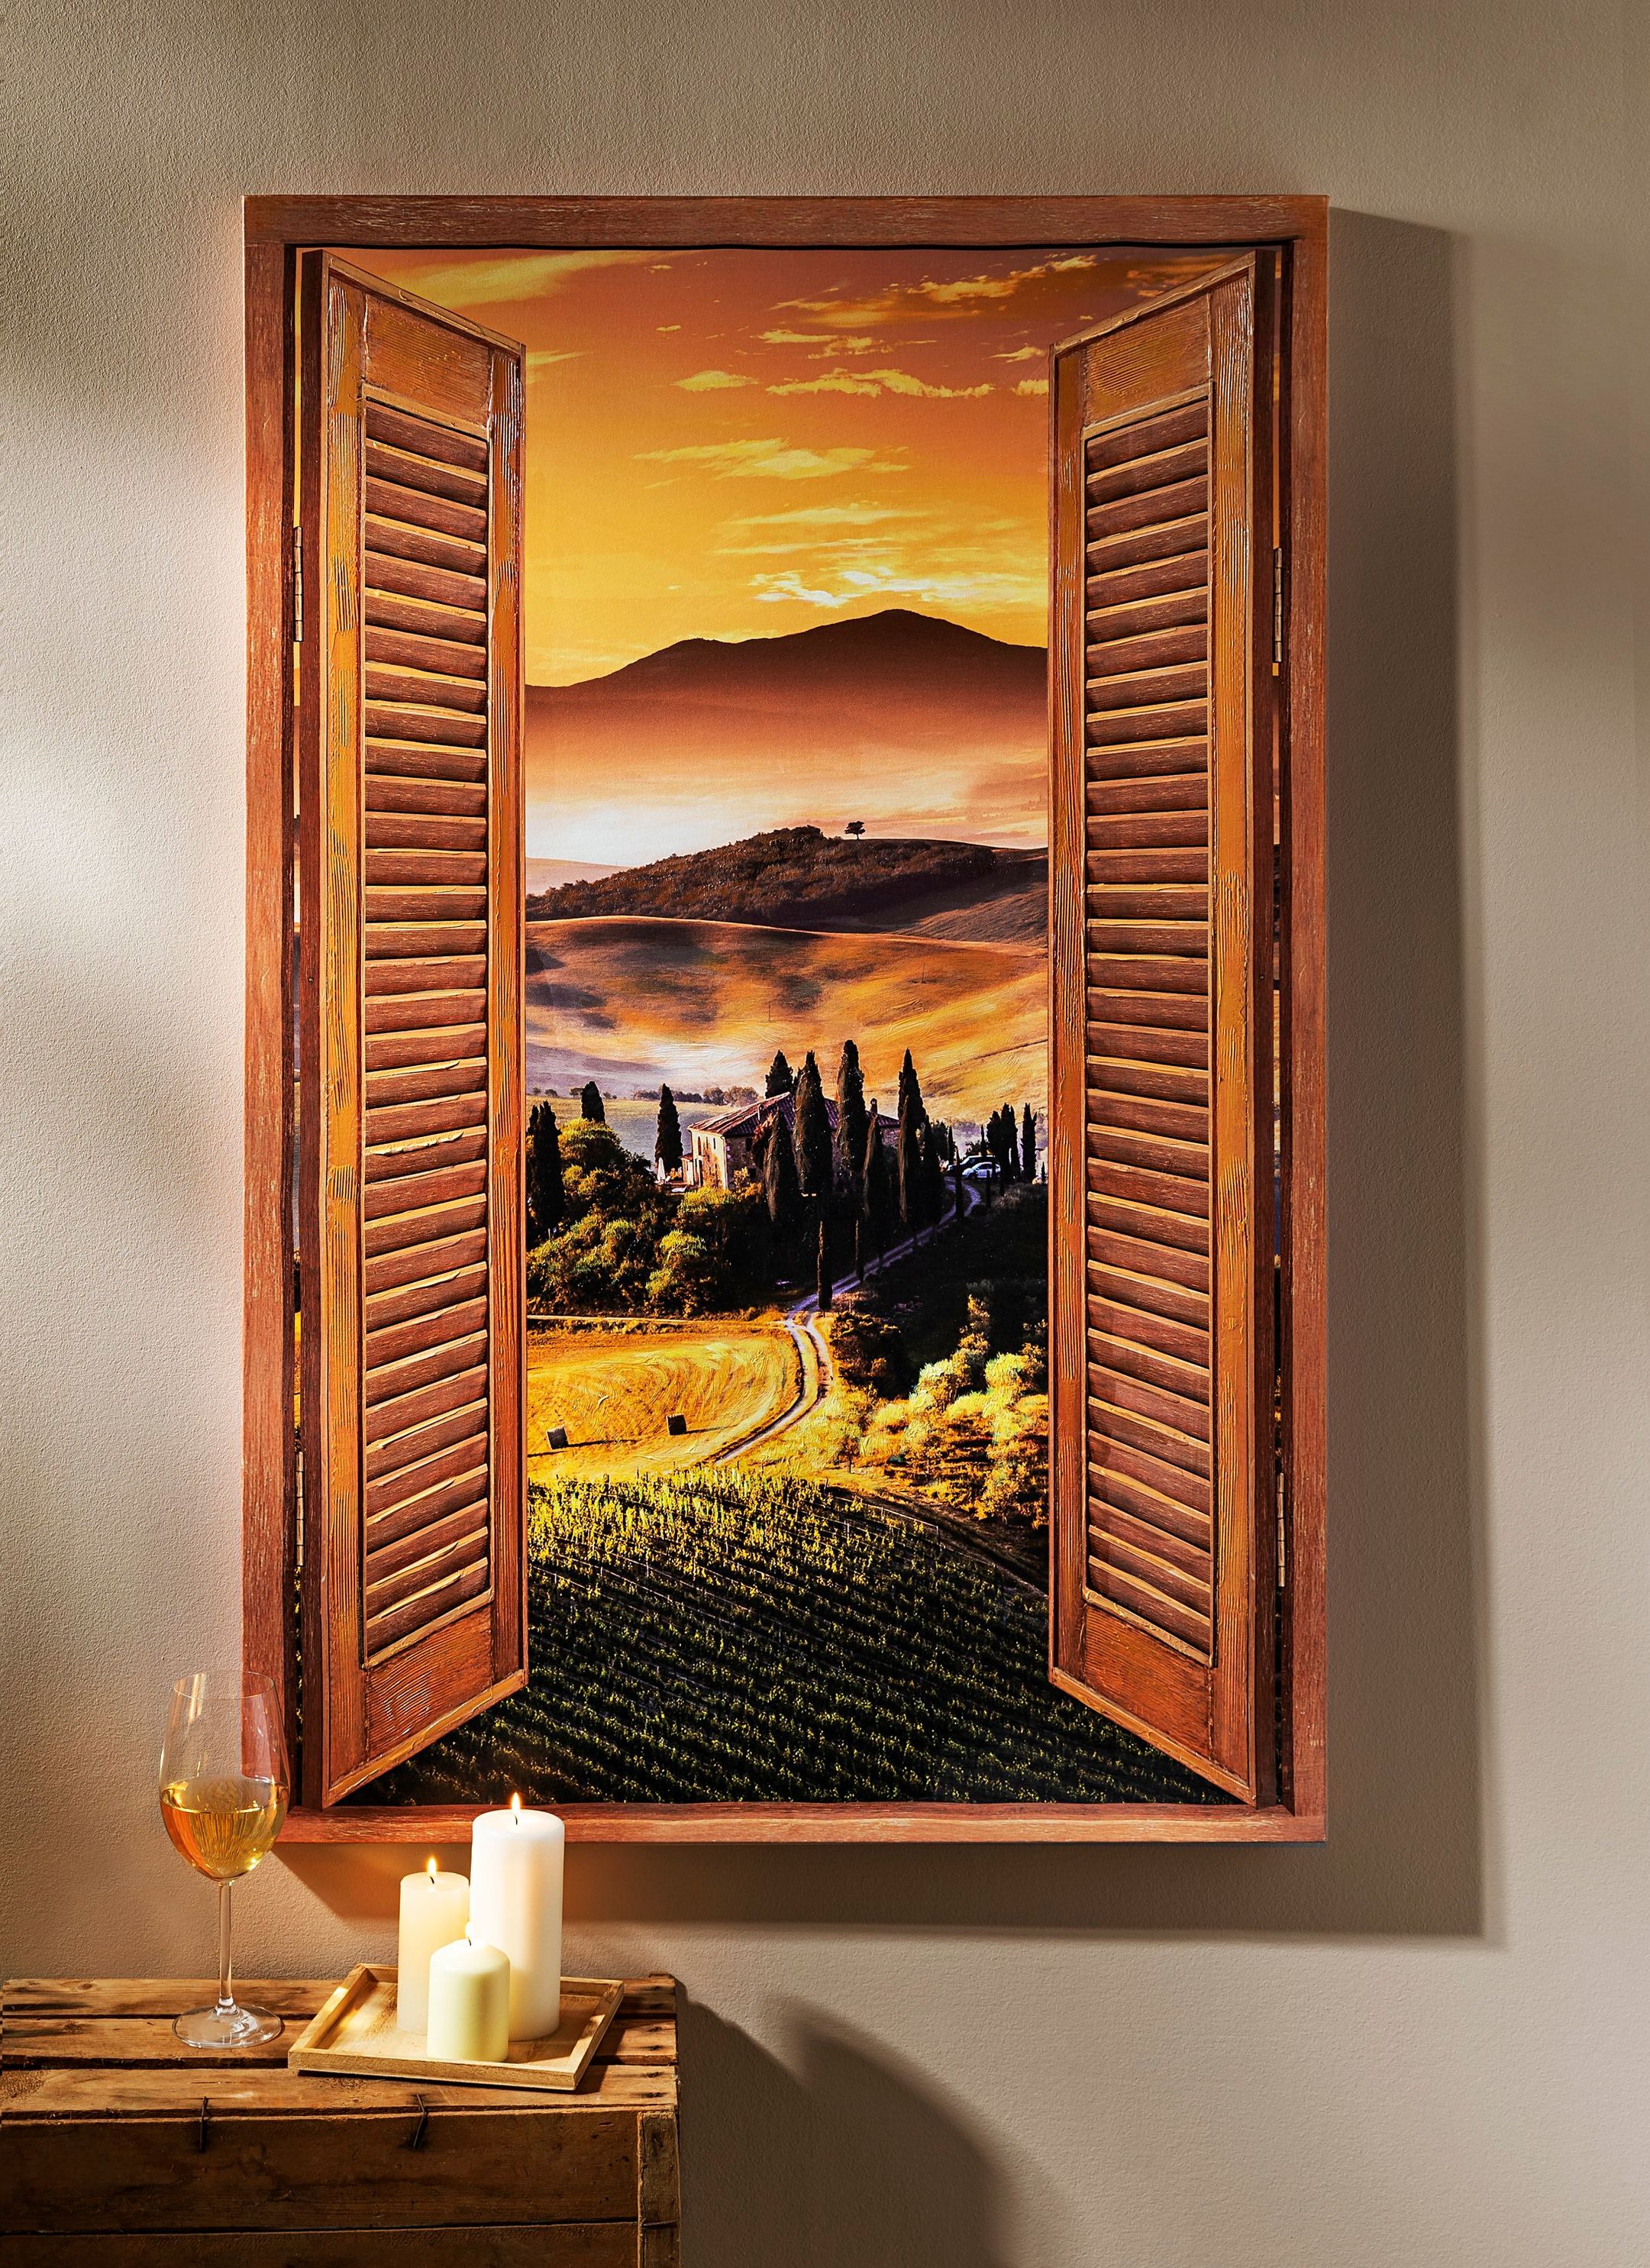 Wandbild Fensterblick Toskana 120x80cm bestellen | Weltbild.de